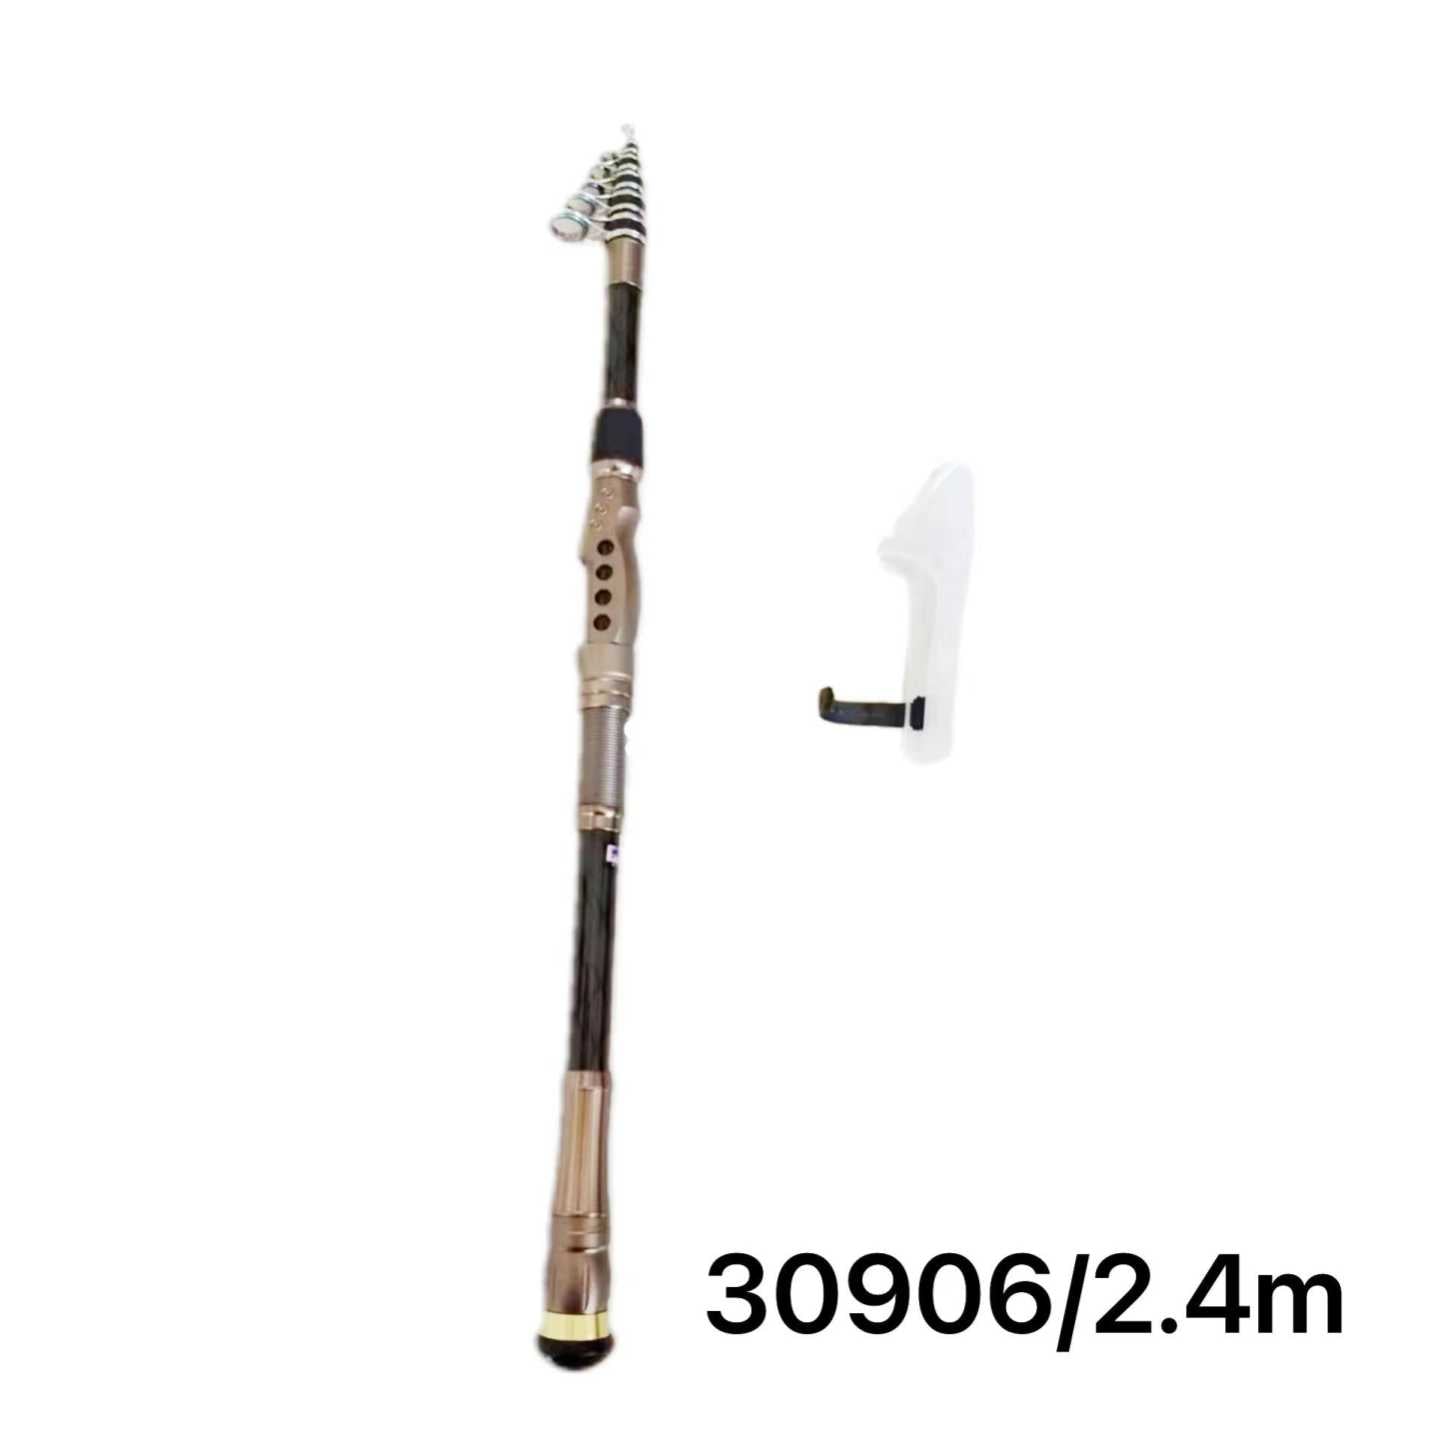 Fishing rod - Telescopic - 2.4m - 30906